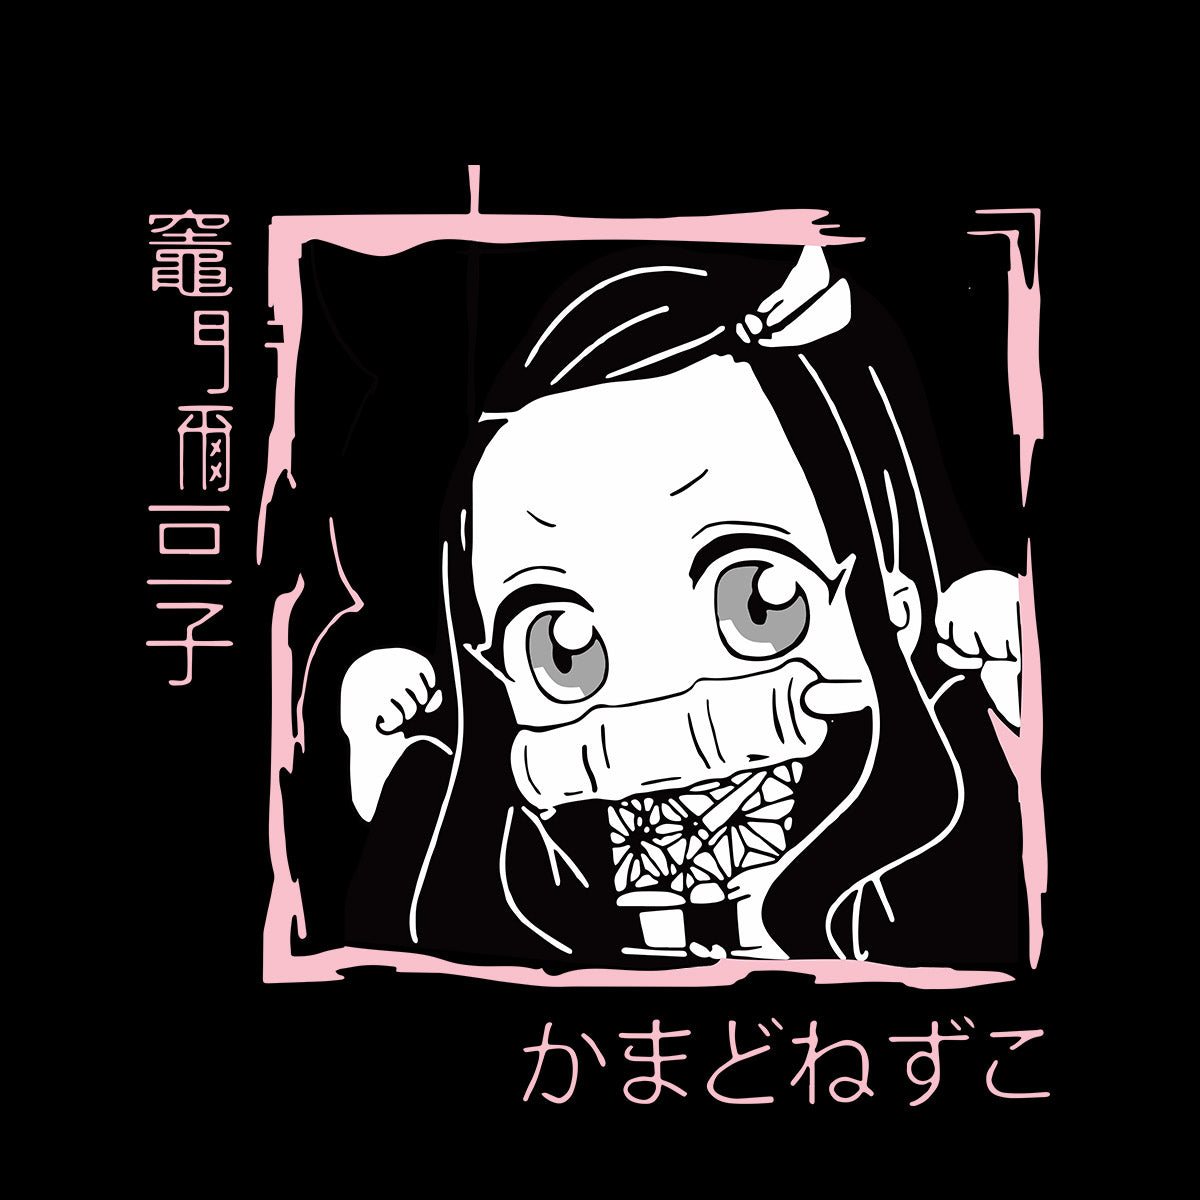 Demon Slayer Kimetsu No Yaiba Kamado Nezuko Japanese Manga Anime Black T-shirt for Kids